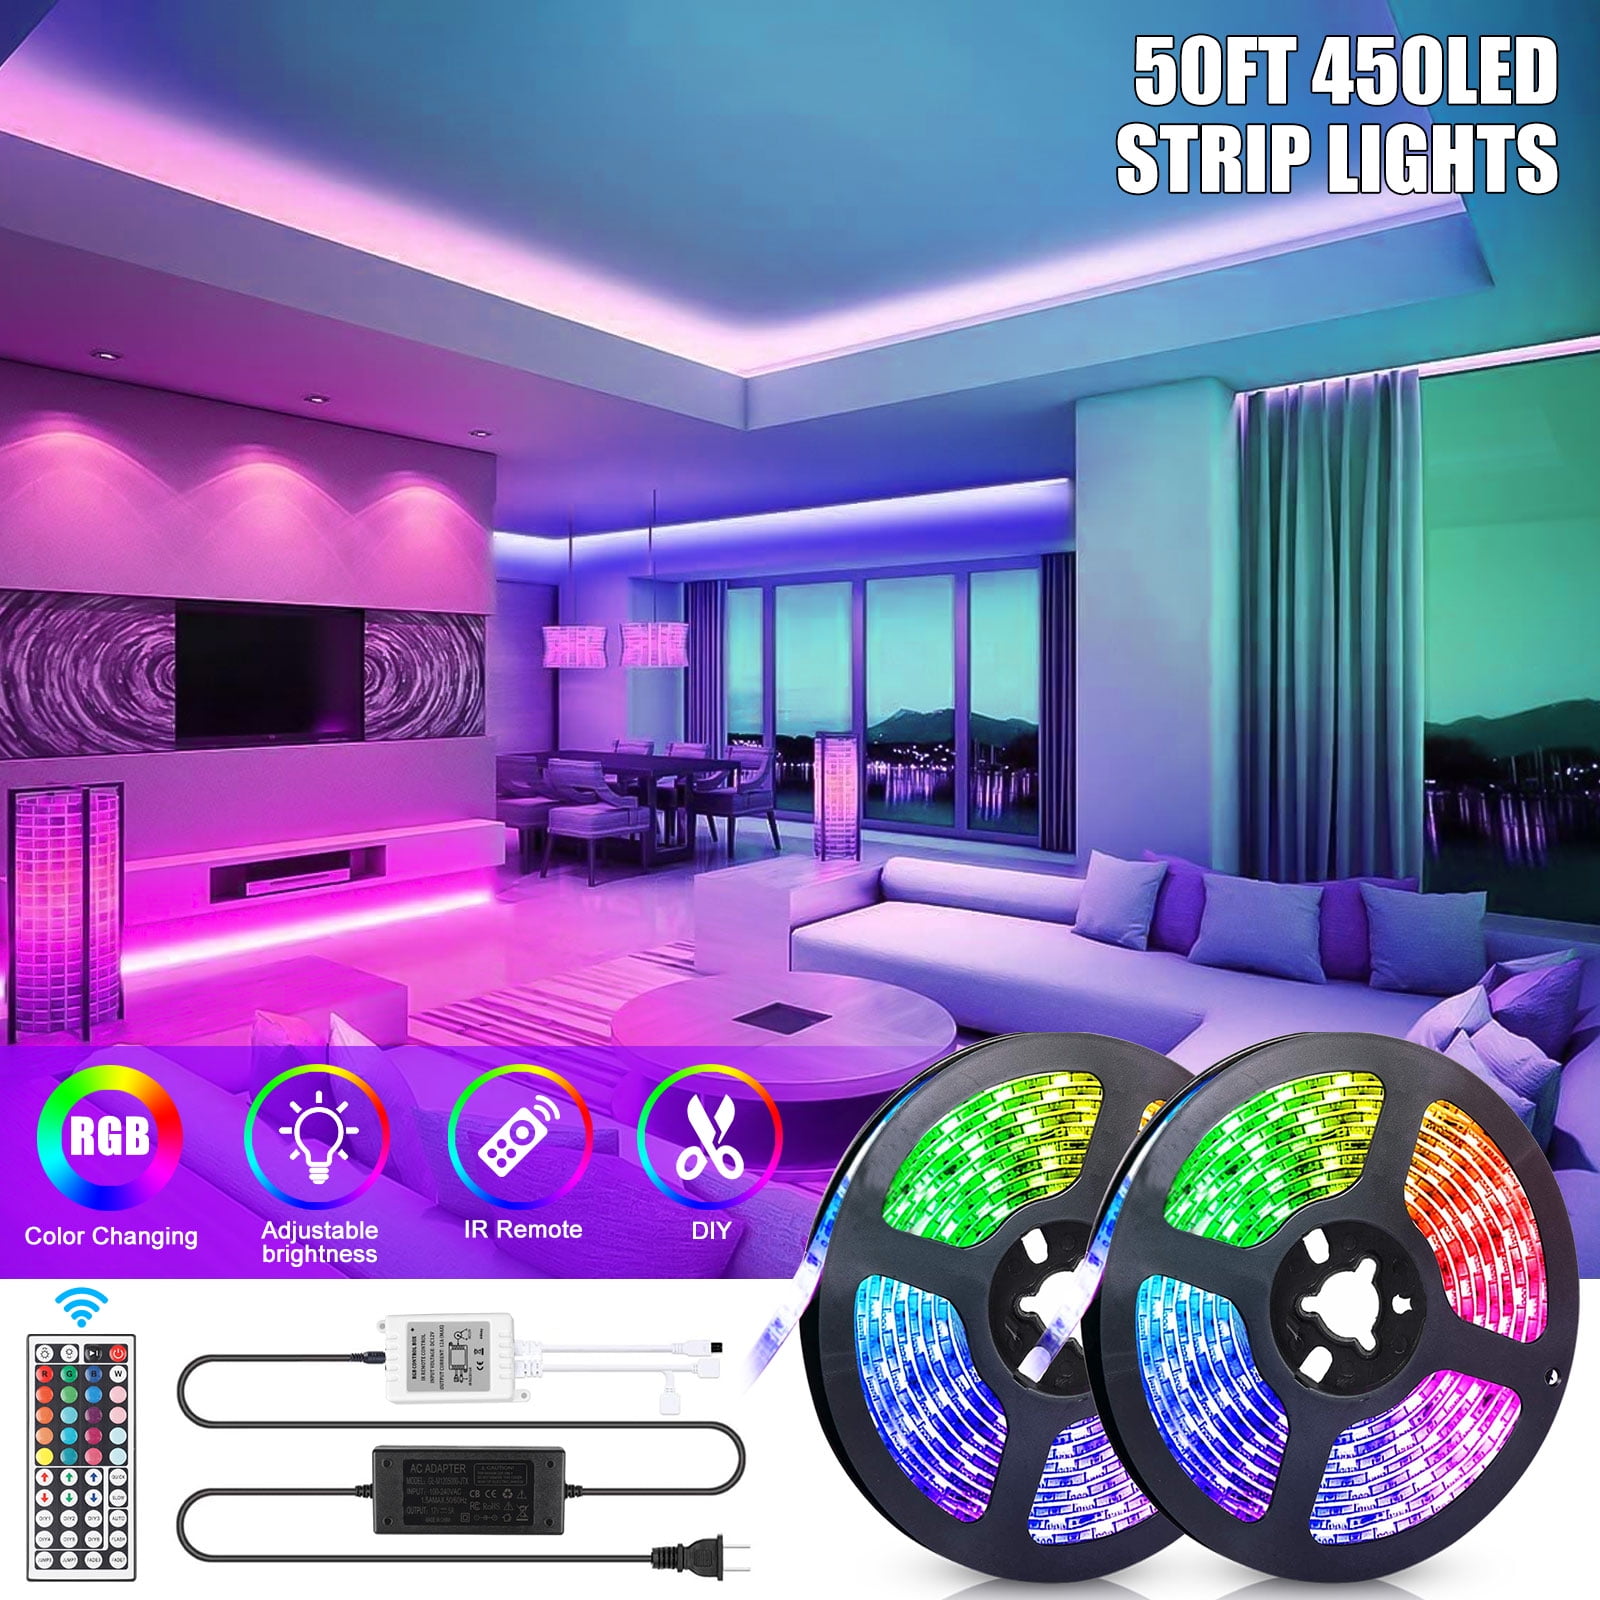 Color Changing 450pcs SMD 5050 RGB Strip Lights 50FEET LED Music Strip Lights 